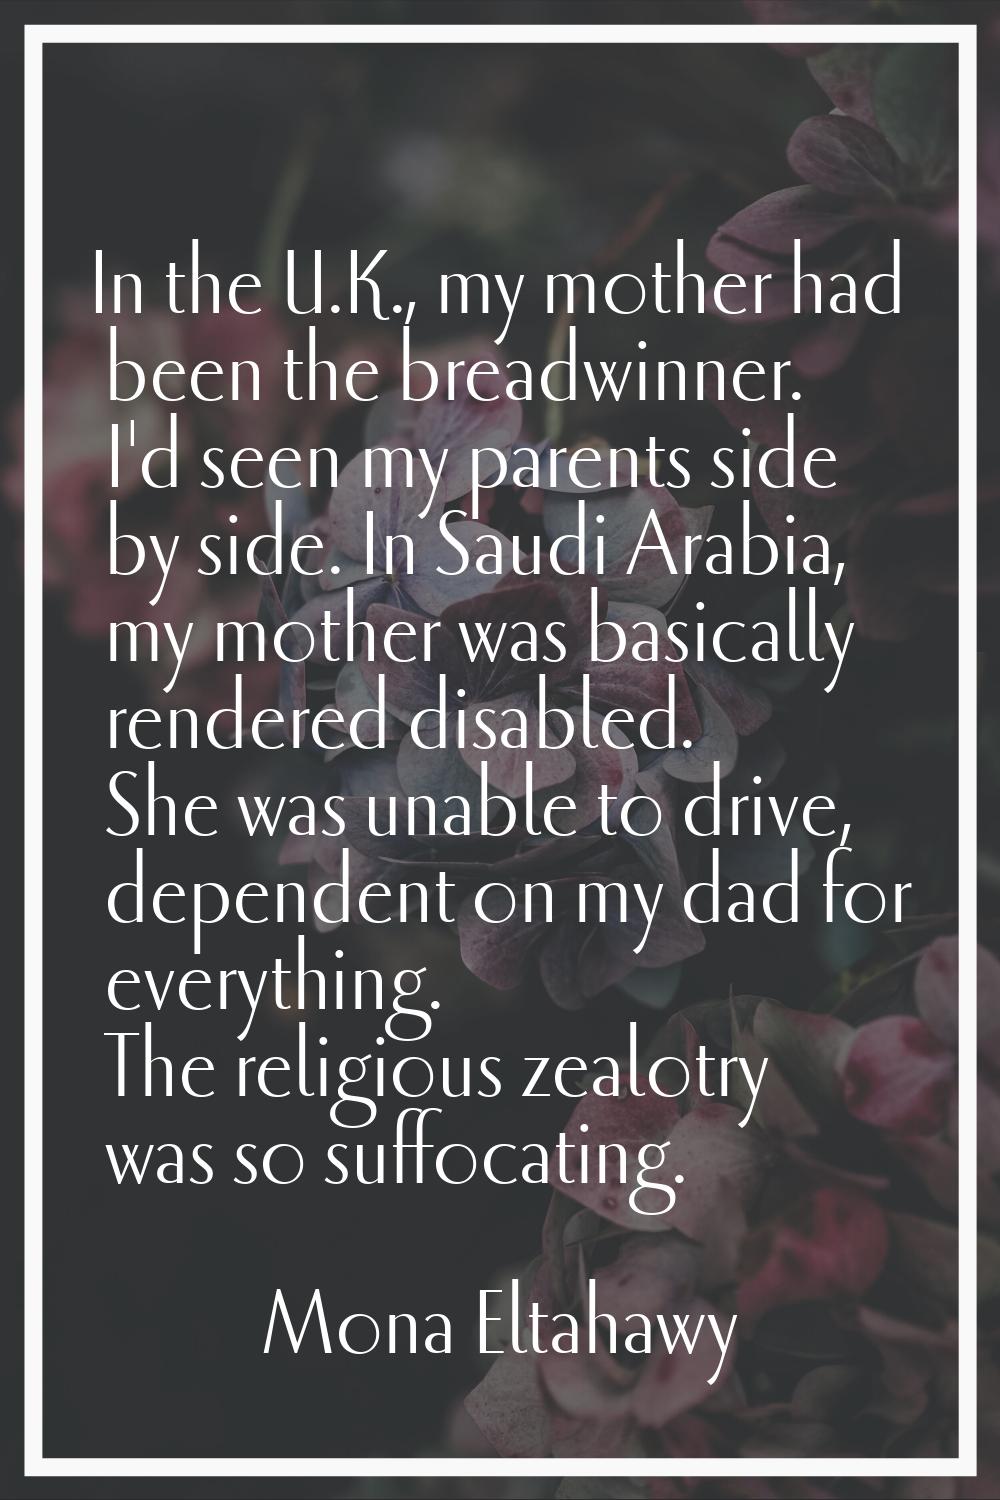 In the U.K., my mother had been the breadwinner. I'd seen my parents side by side. In Saudi Arabia,